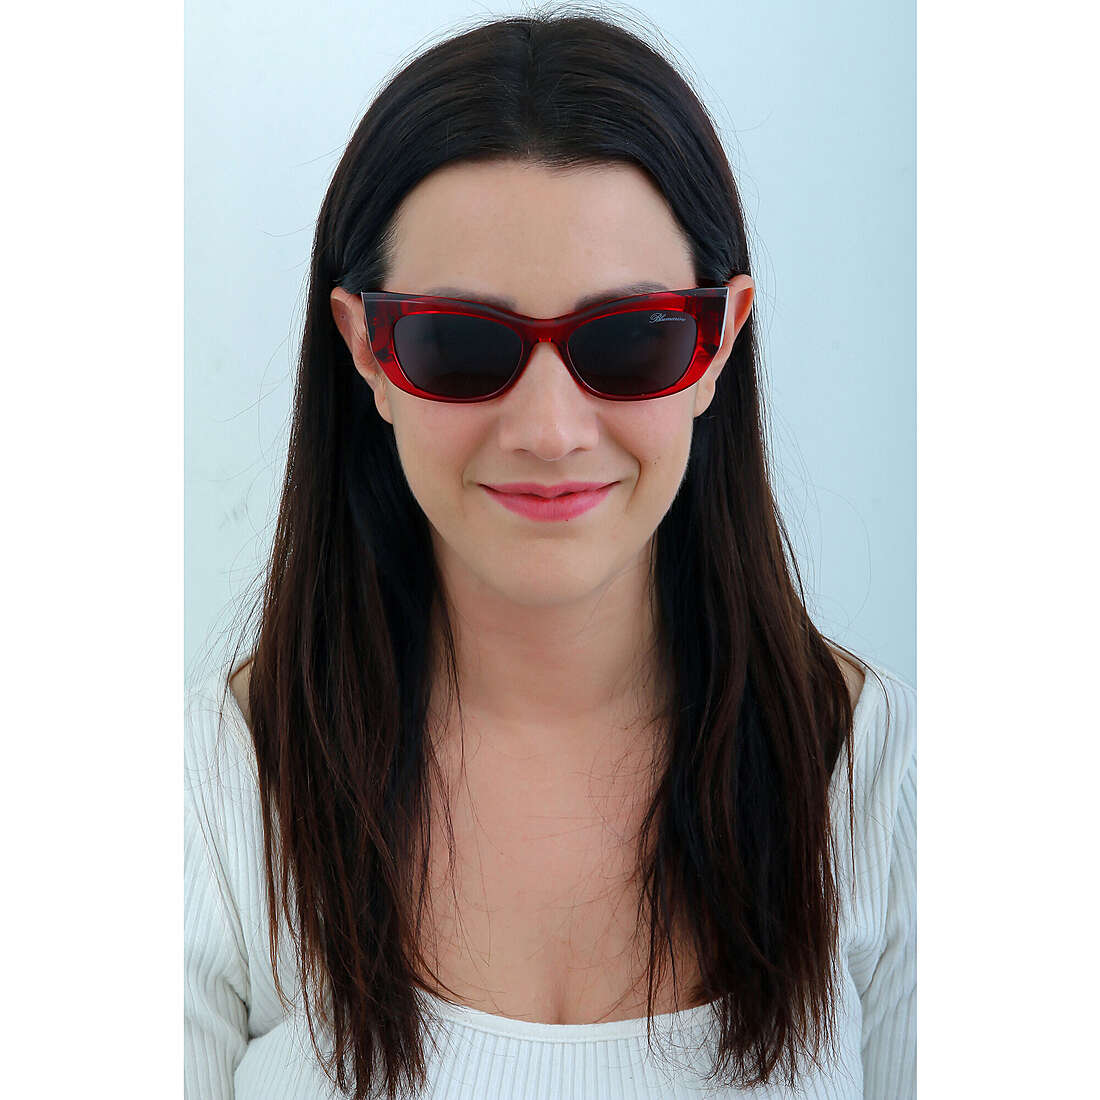 Blumarine occhiali da sole donna SBM797530AFD indosso